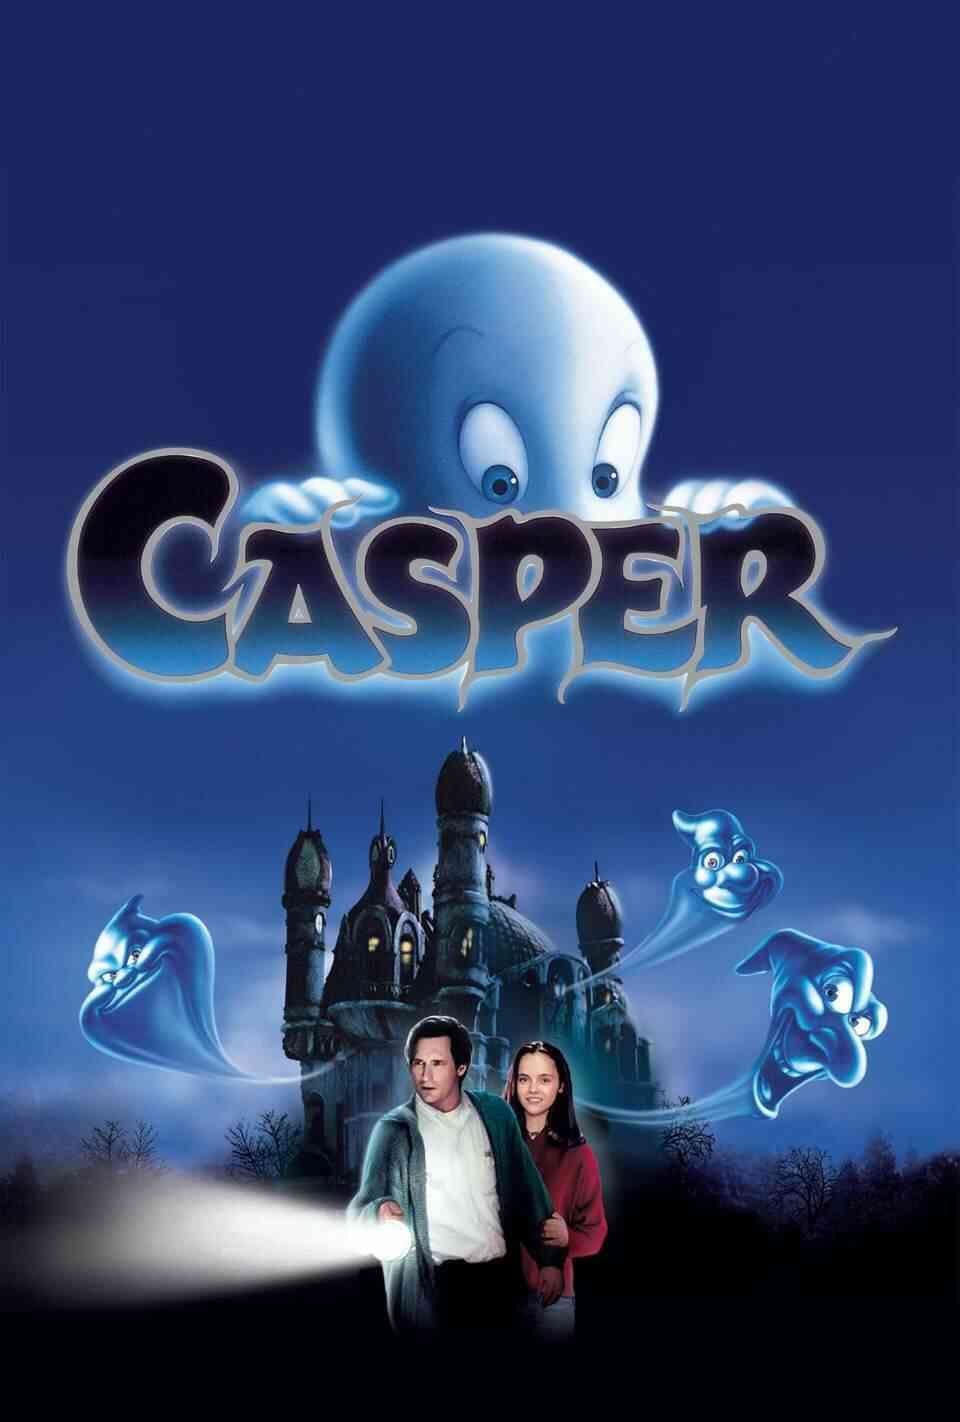 Read Casper screenplay (poster)